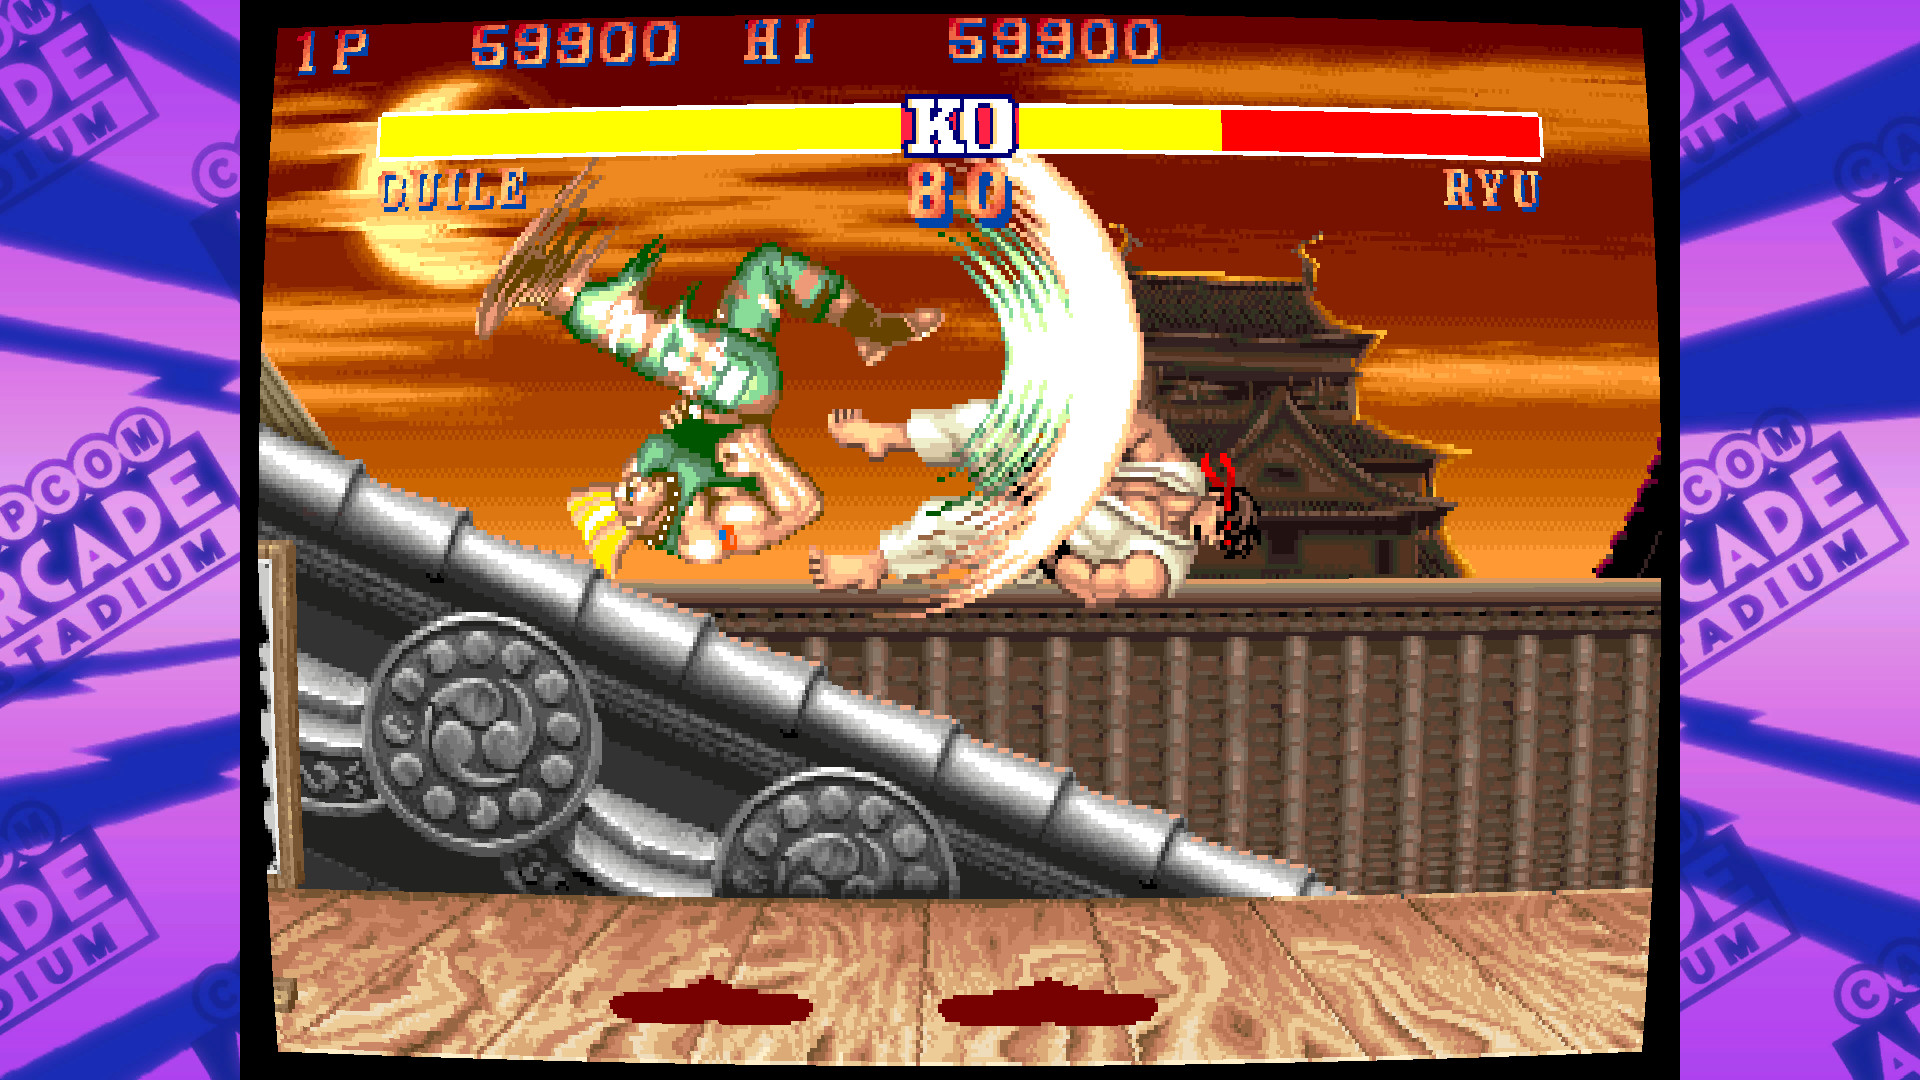 Capcom Arcade Stadium：STREET FIGHTER II - The World Warrior - for